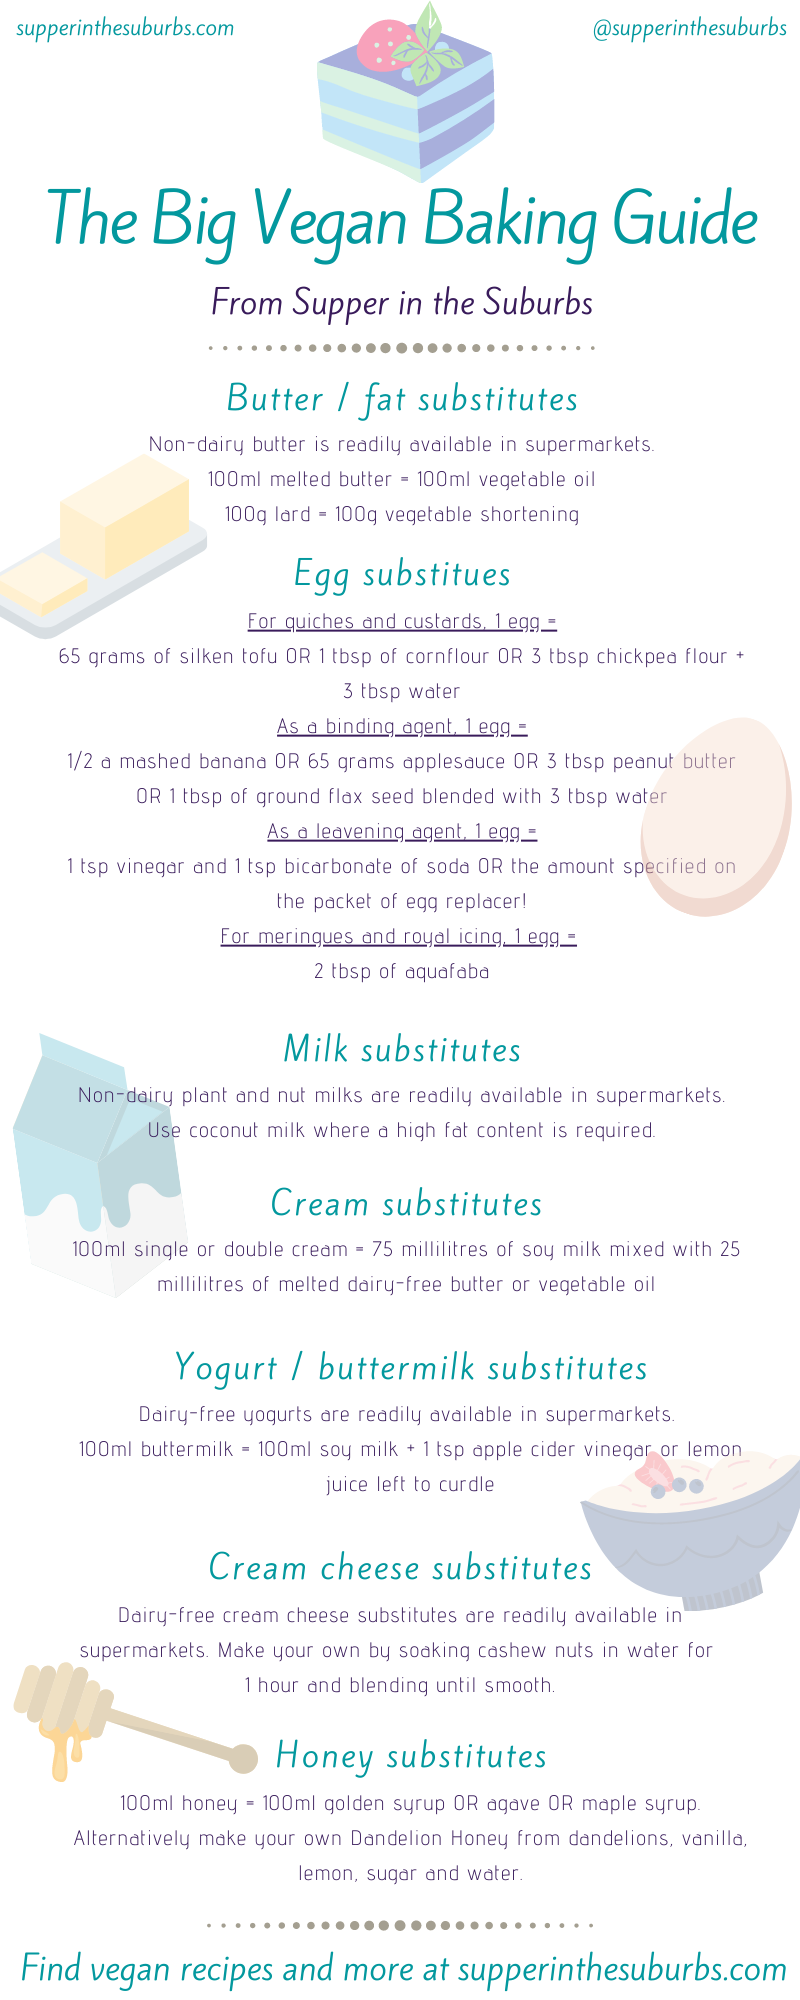 The Big Vegan Baking Guide Infographic